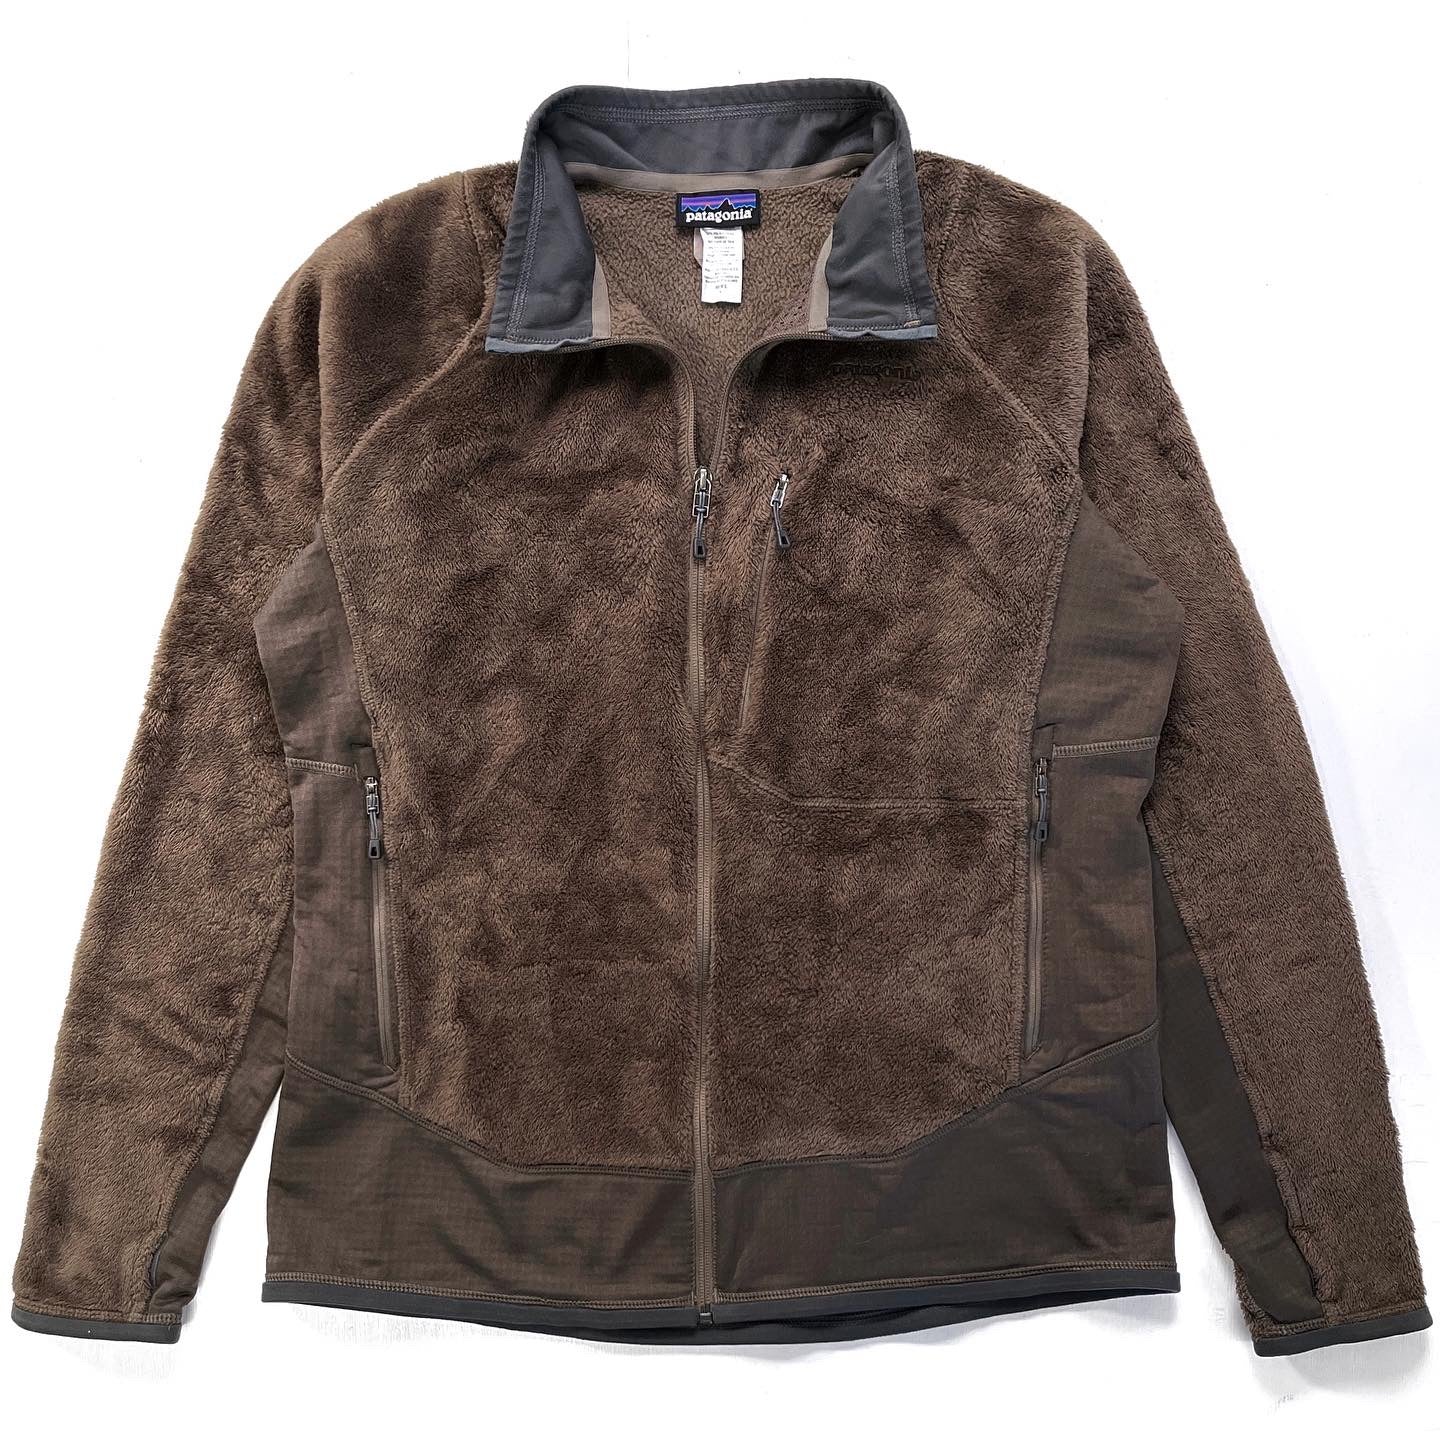 2013 Patagonia R3 Hi-Loft Regulator Fleece Jacket, Dark Walnut (L)